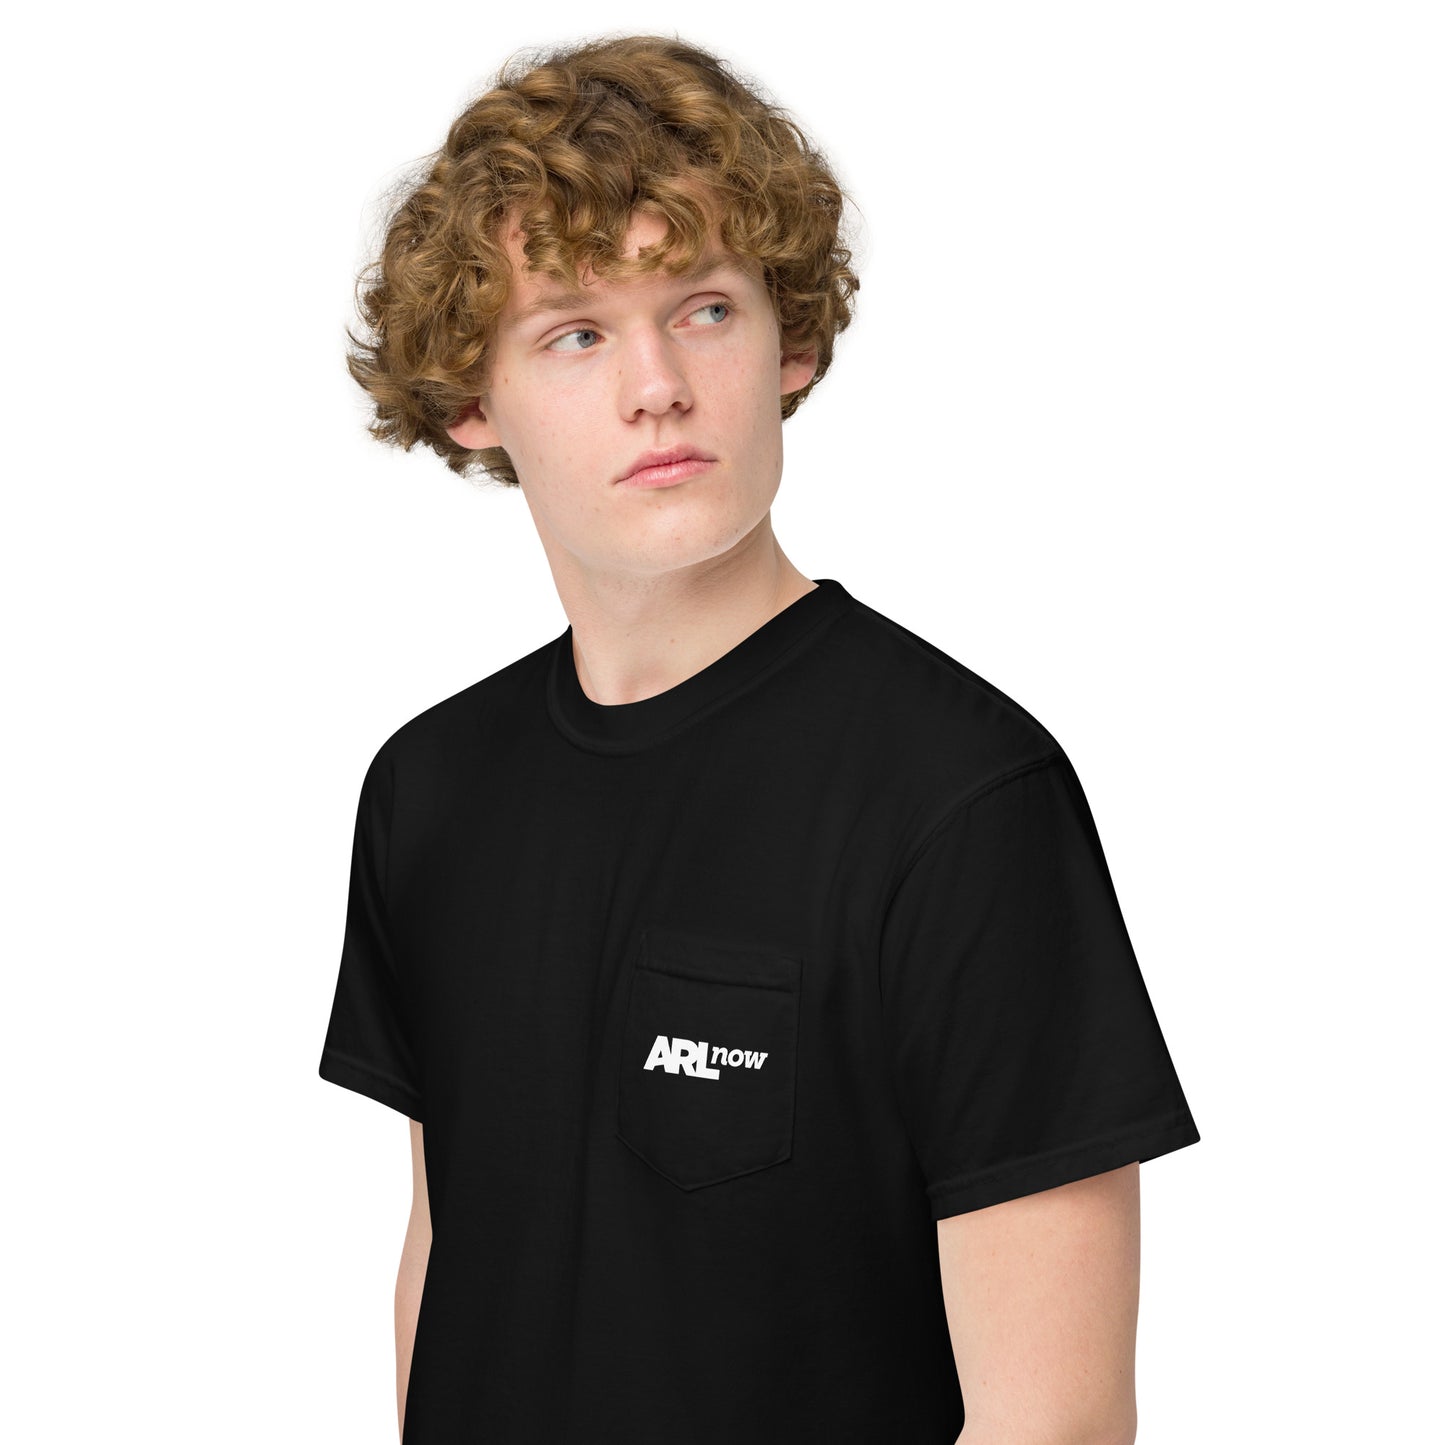 ARLnow logo garment-dyed pocket t-shirt